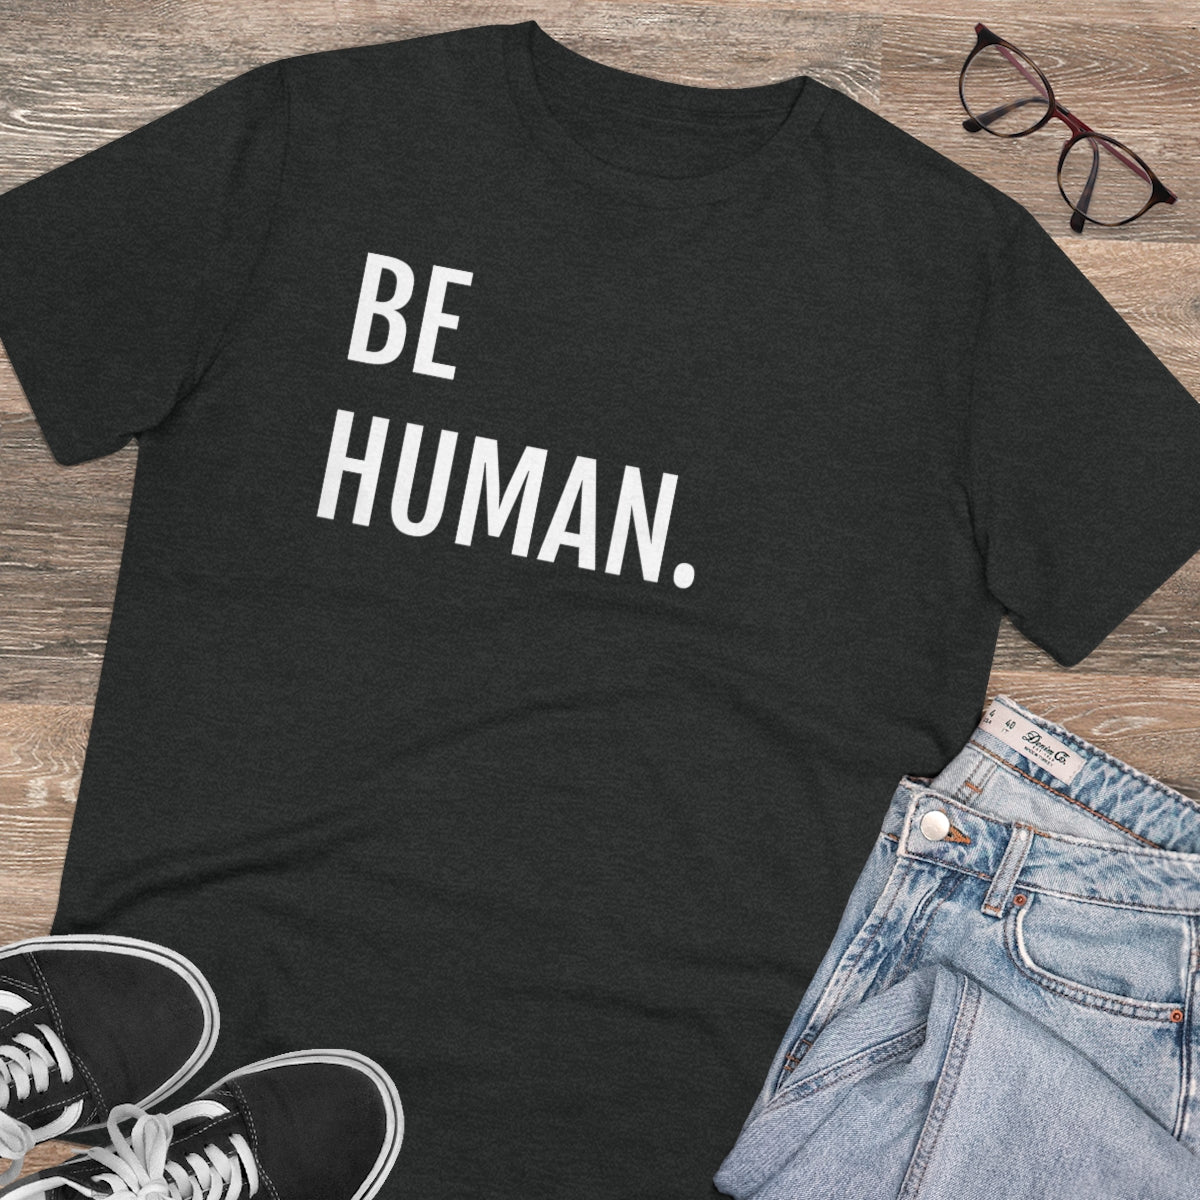 BE HUMAN. - Organic Creator T-shirt - Unisex